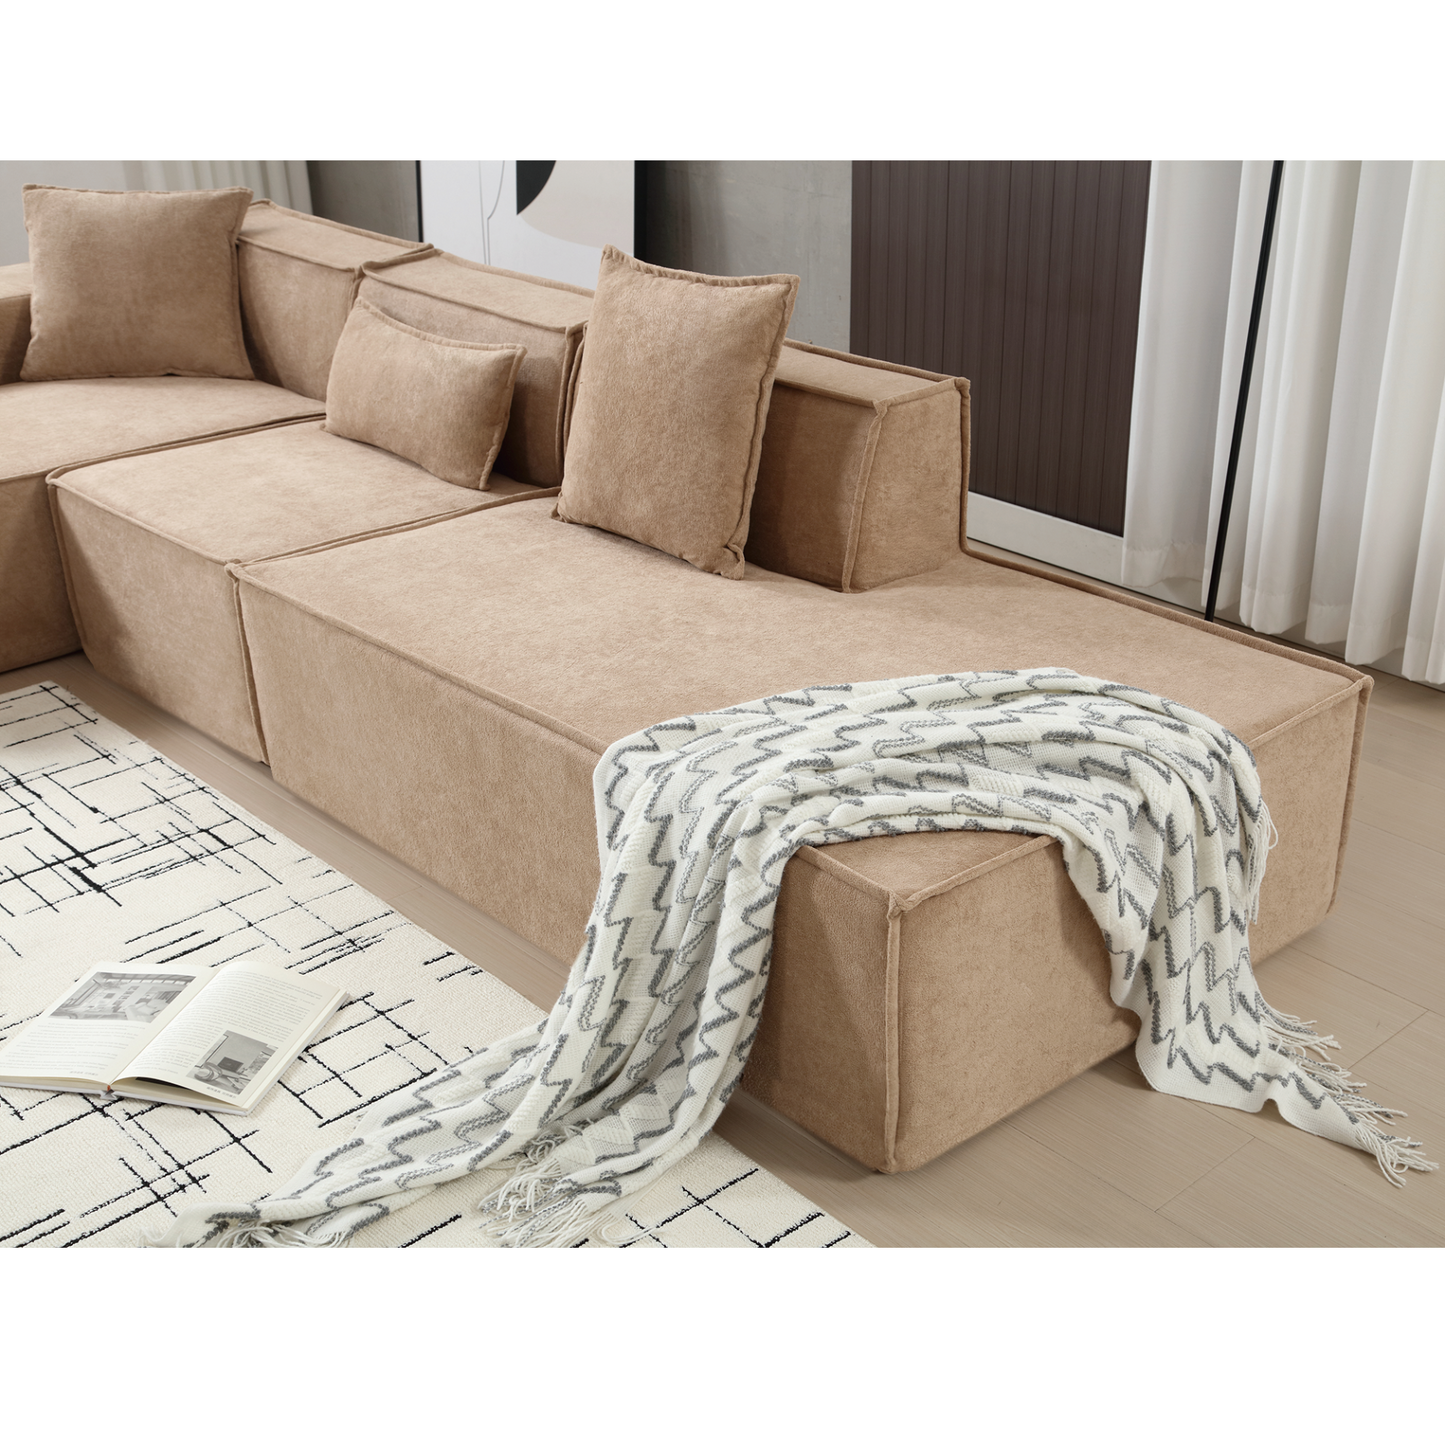 Modular combination living room sofa set, modern minimalist sofa, free installation sofa, L-shaped, Italian minimalist tofu block sofa, Left-Hand Facing, Light Brown, Goodies N Stuff